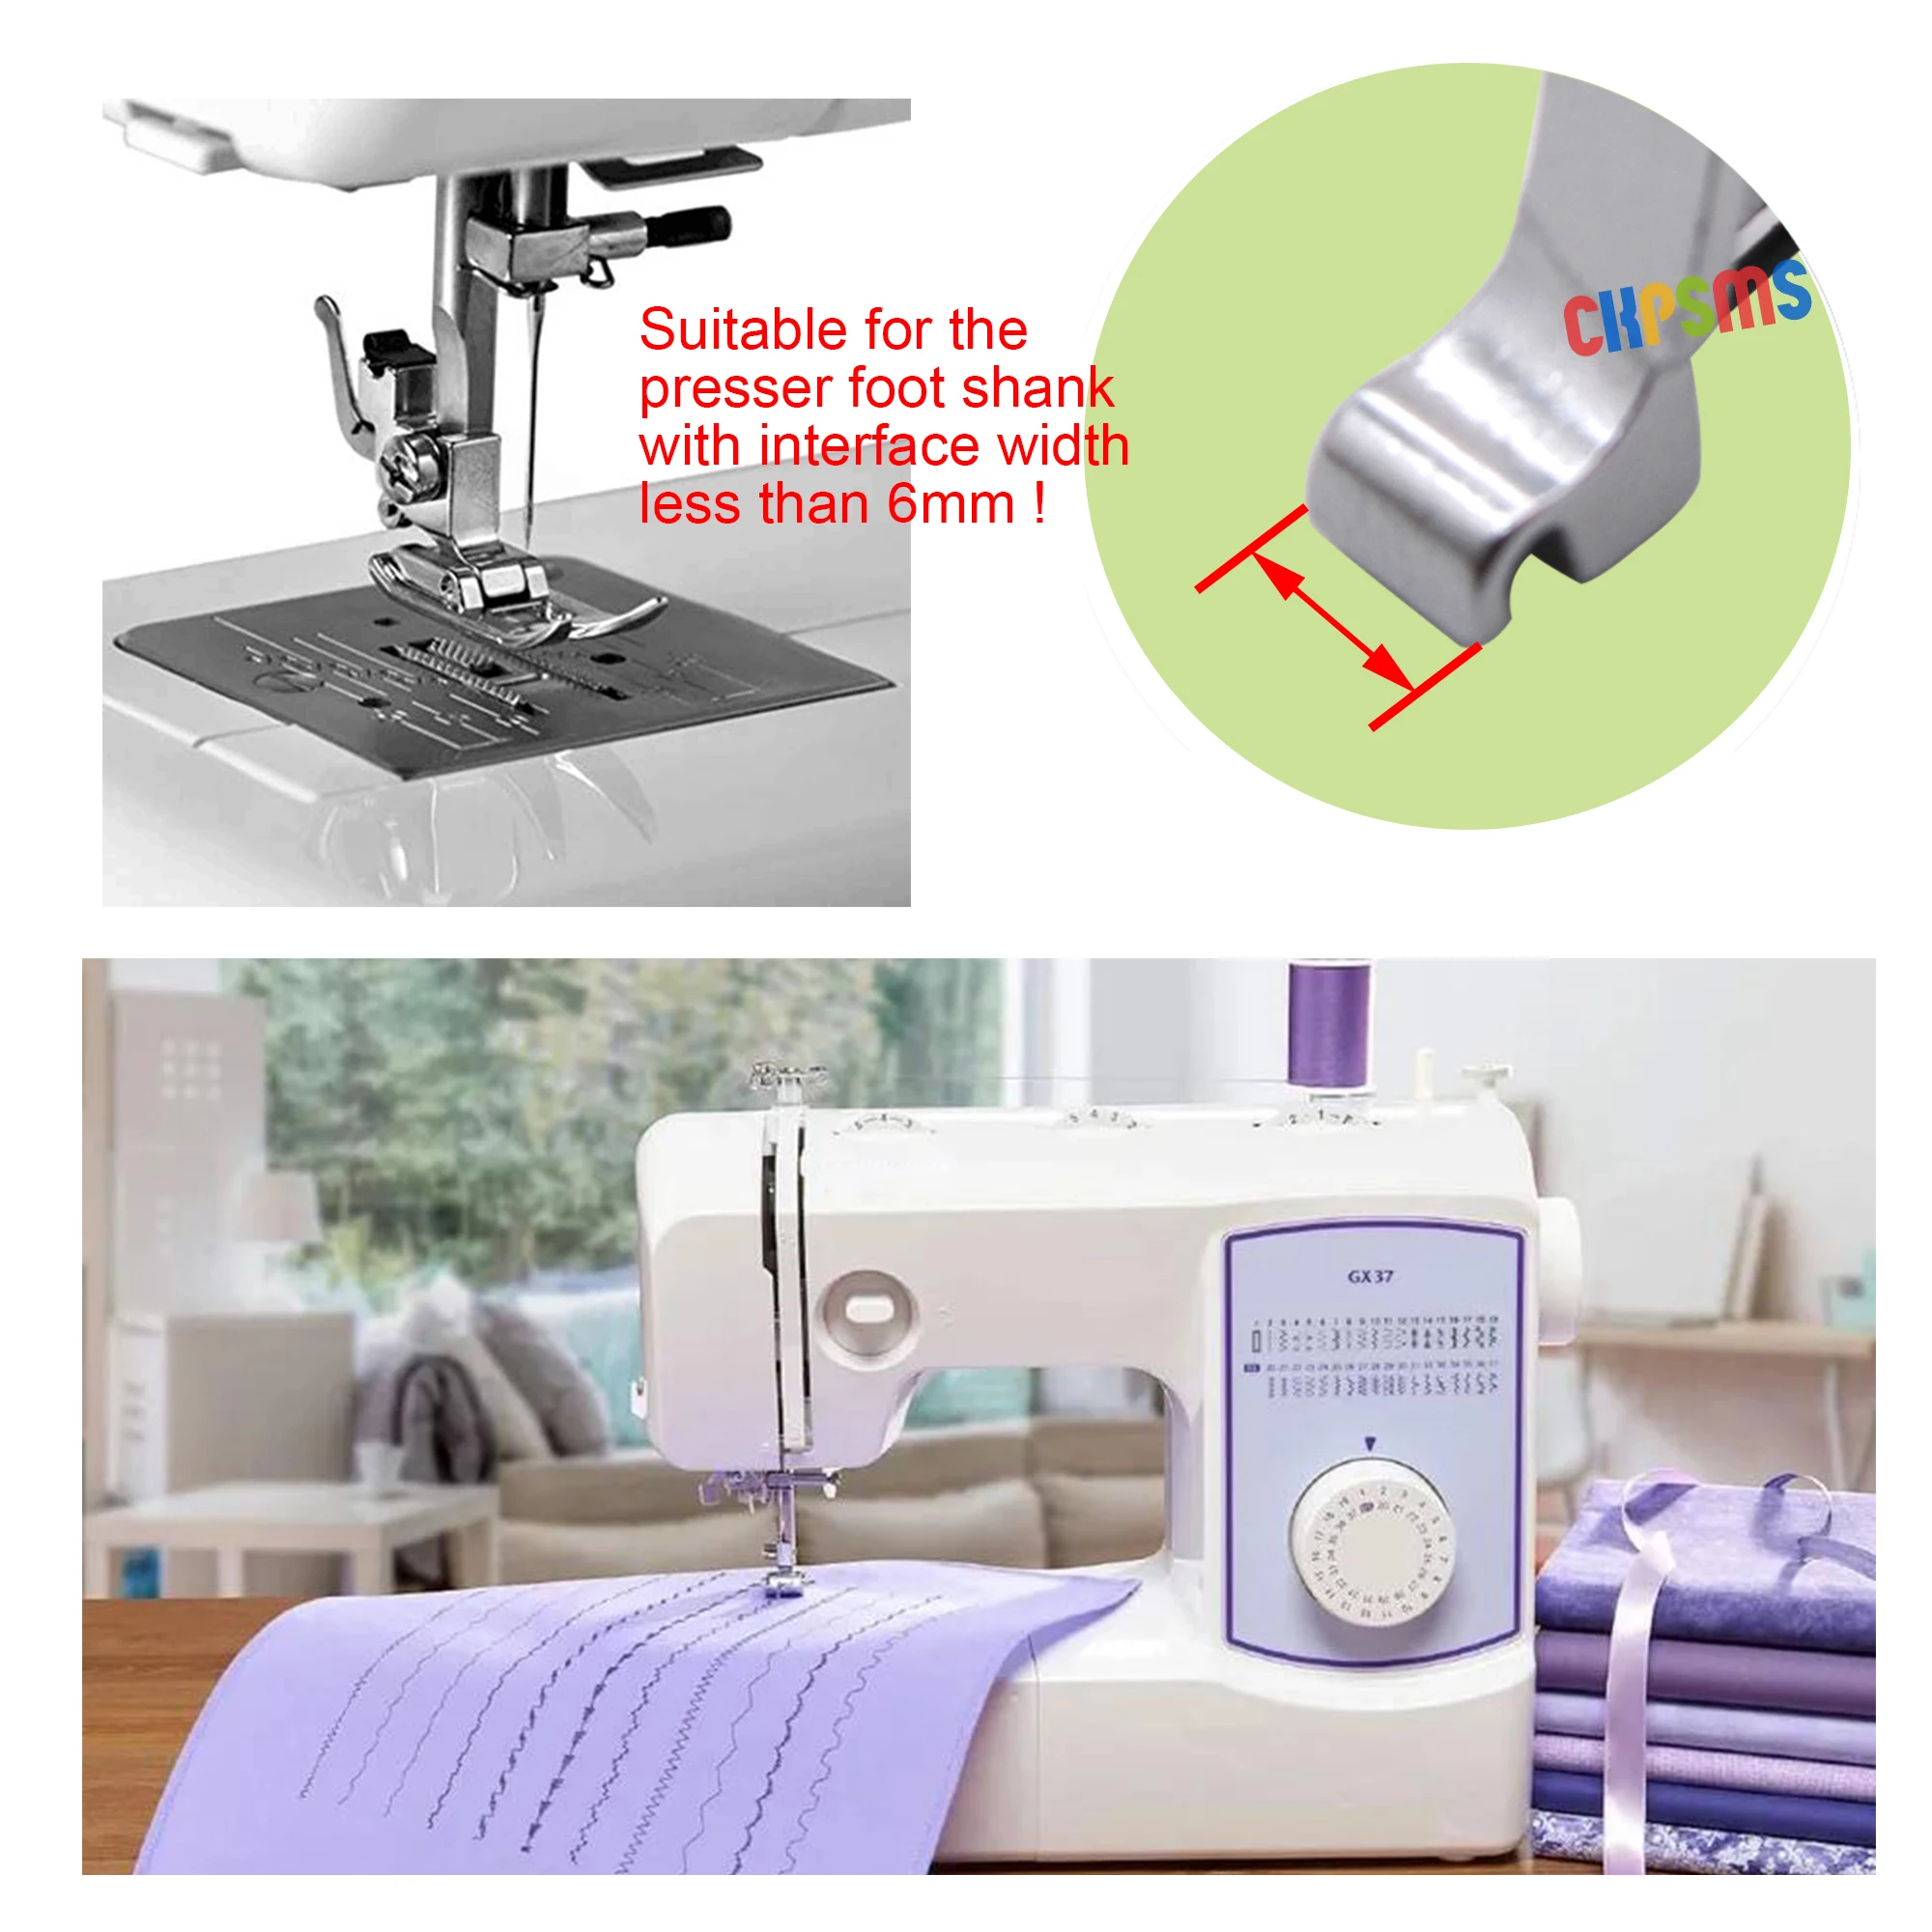 Kenmore 158.17850 Sewing Machine Instruction Manual